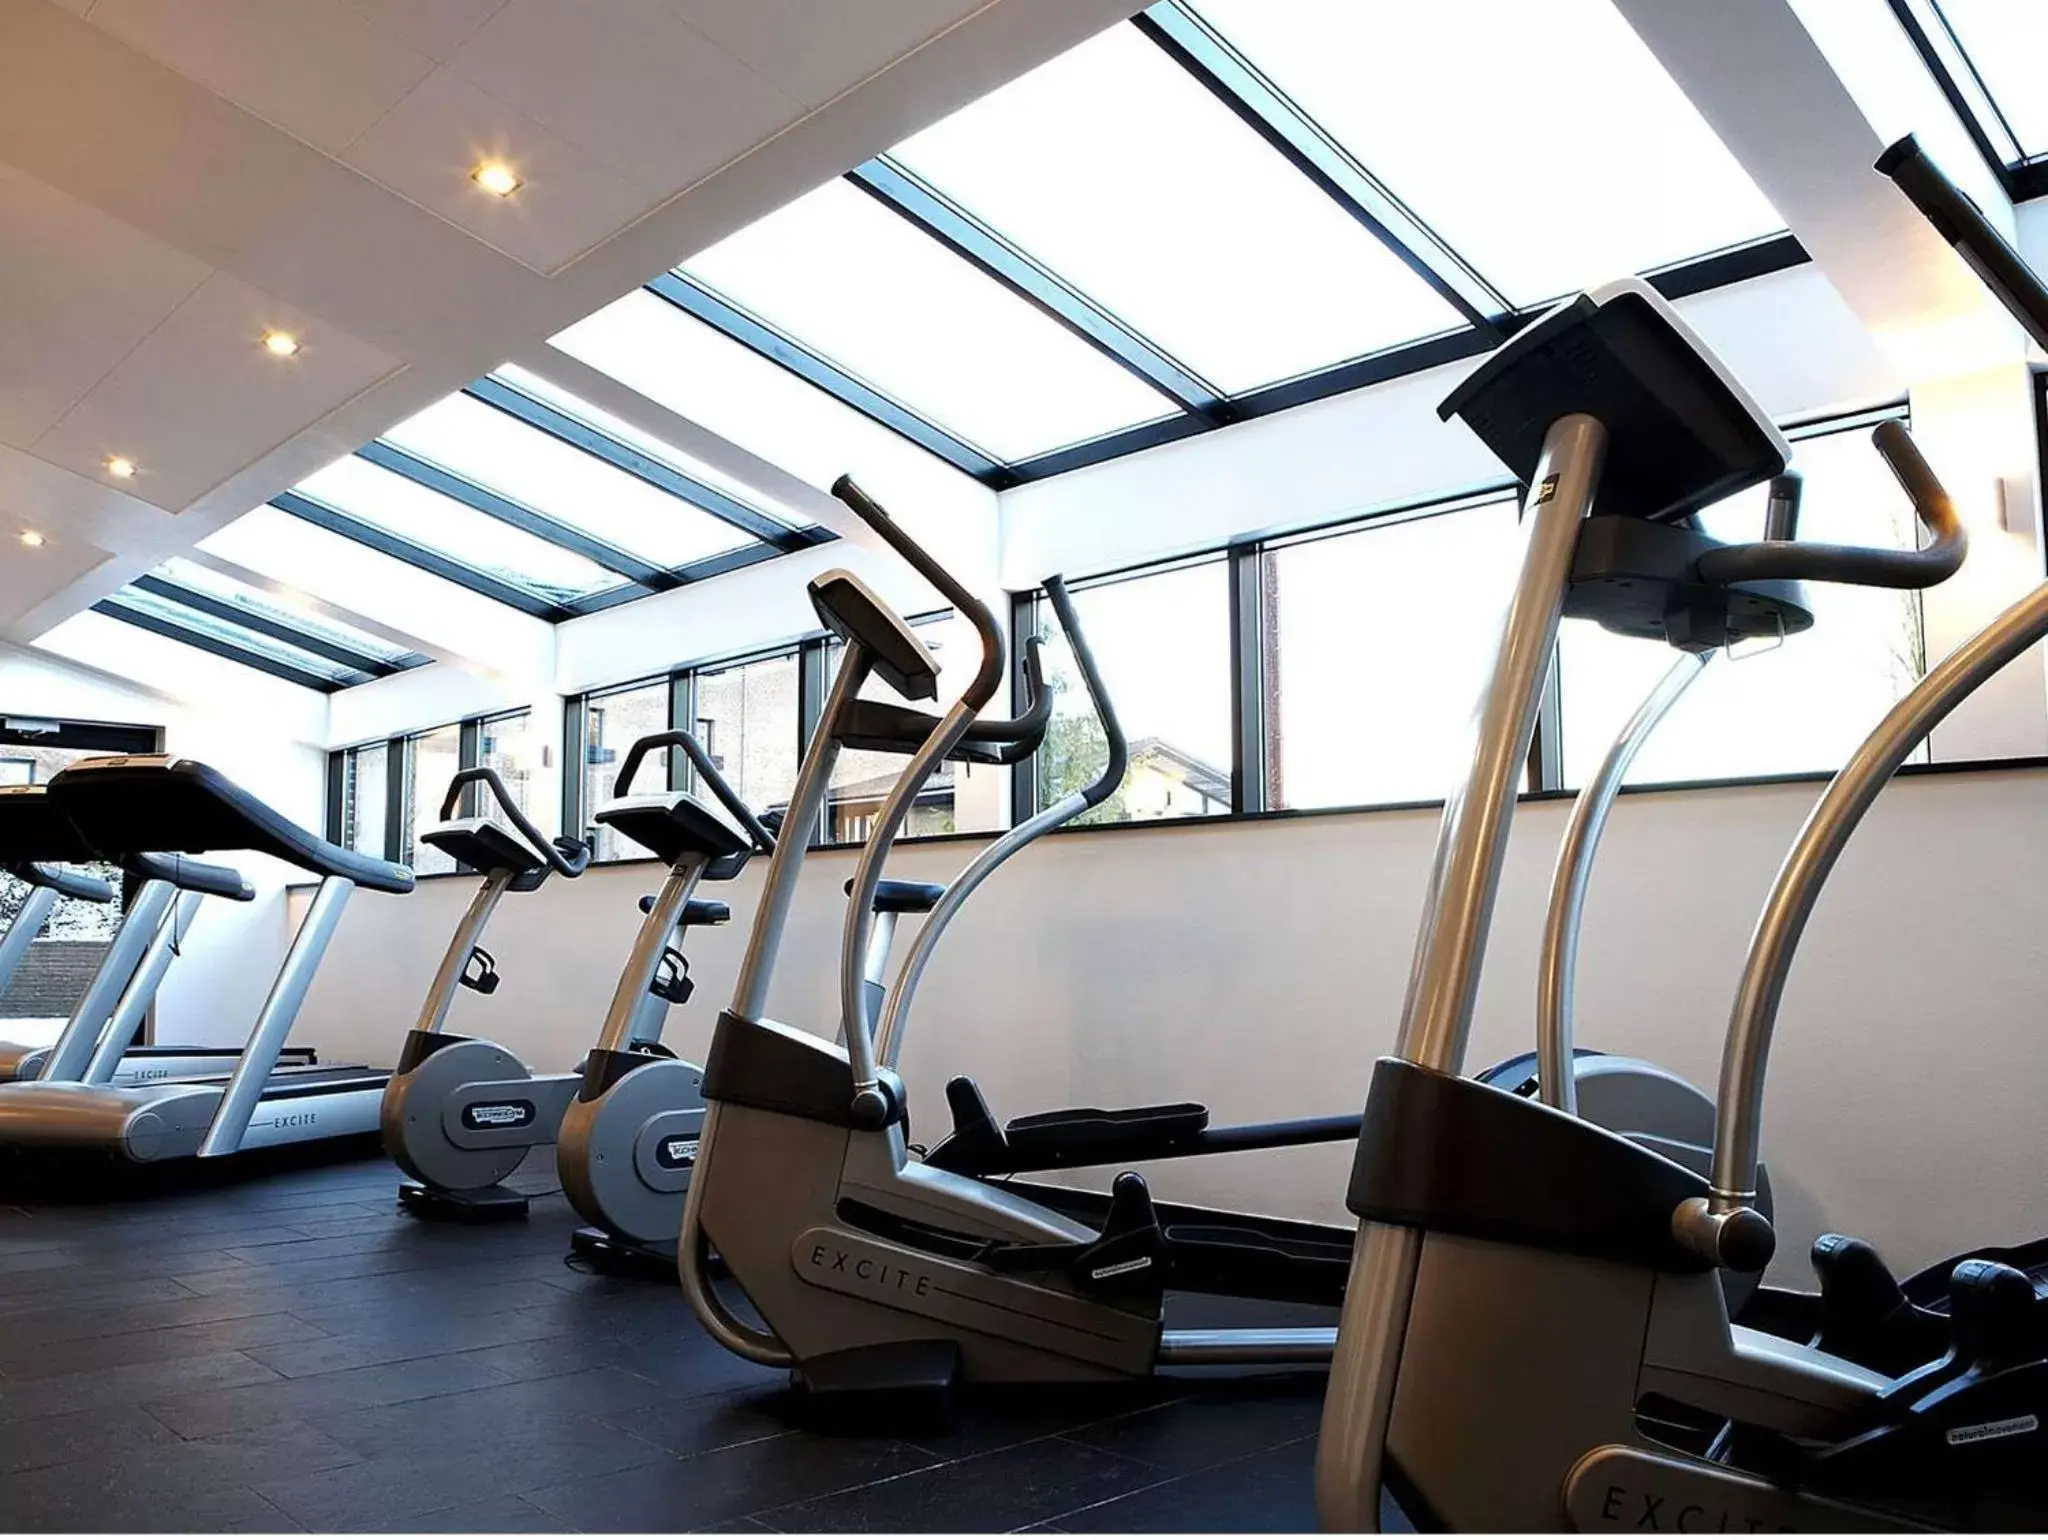 Fitness centre/facilities, Fitness Center/Facilities in Munkebjerg Hotel